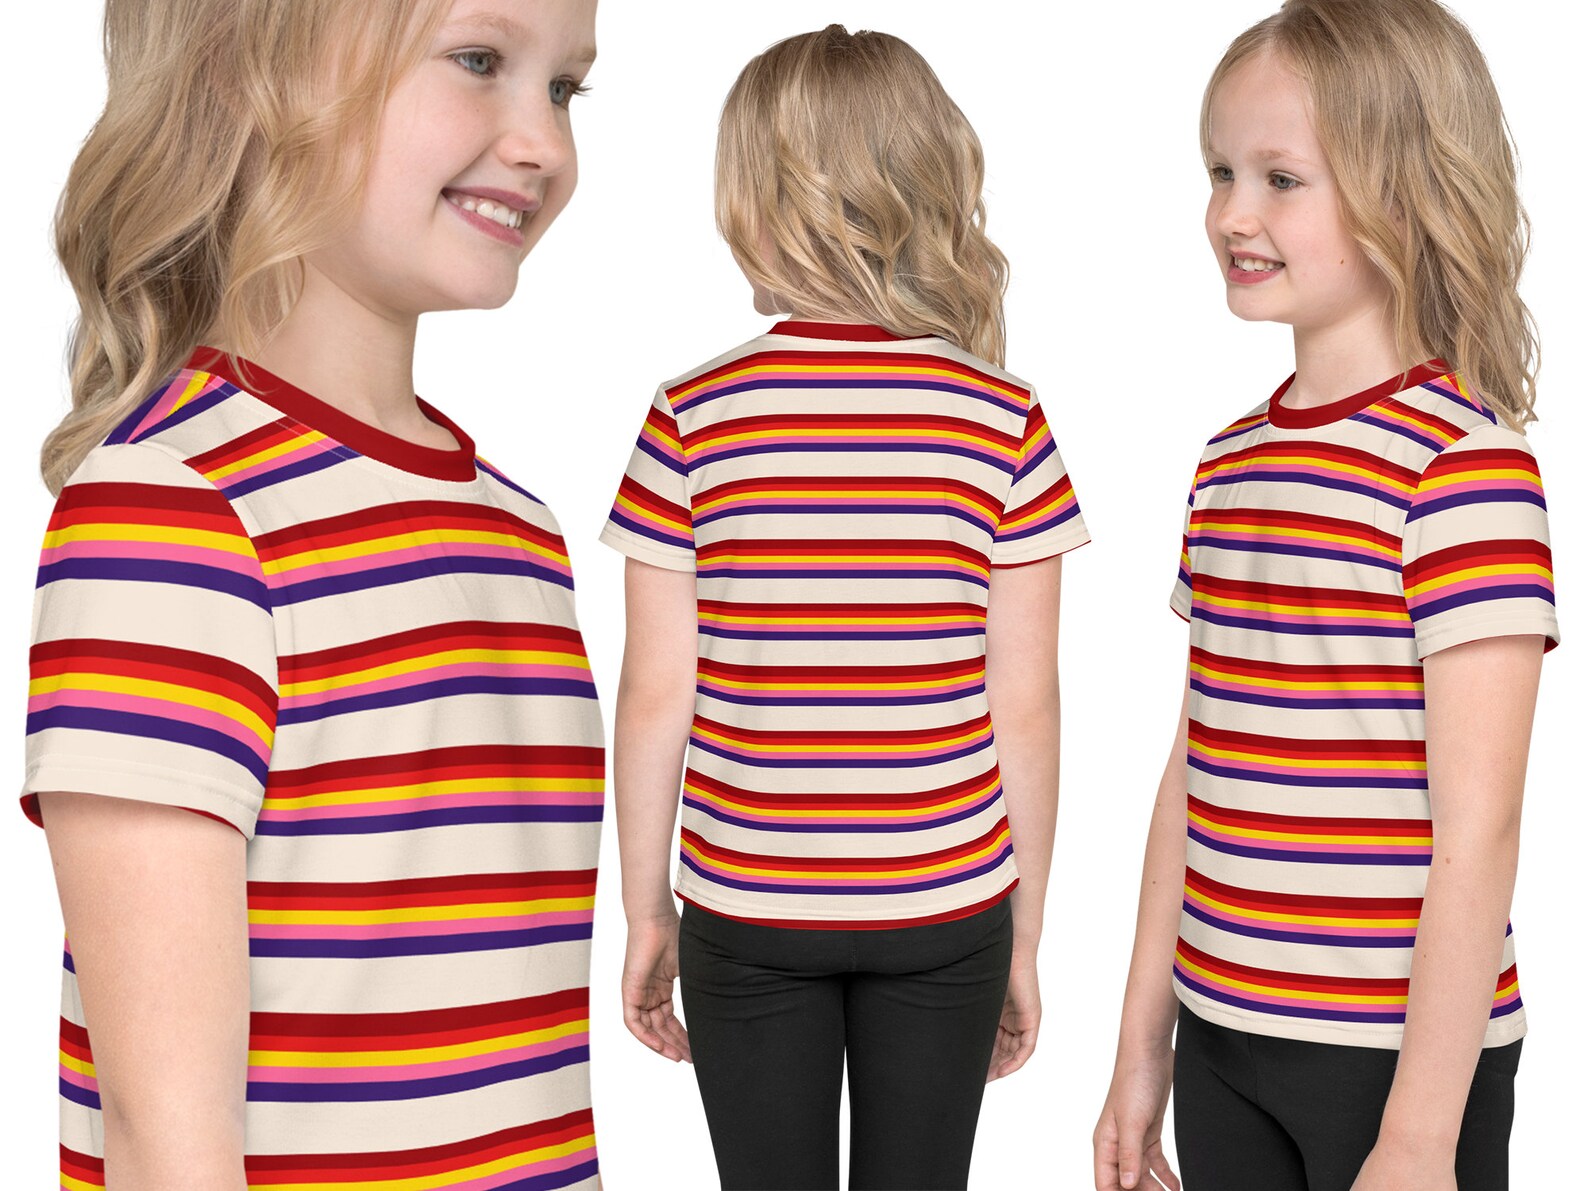 Max Stranger Things Striped T-shirt Girl Top Halloween Costume - Etsy